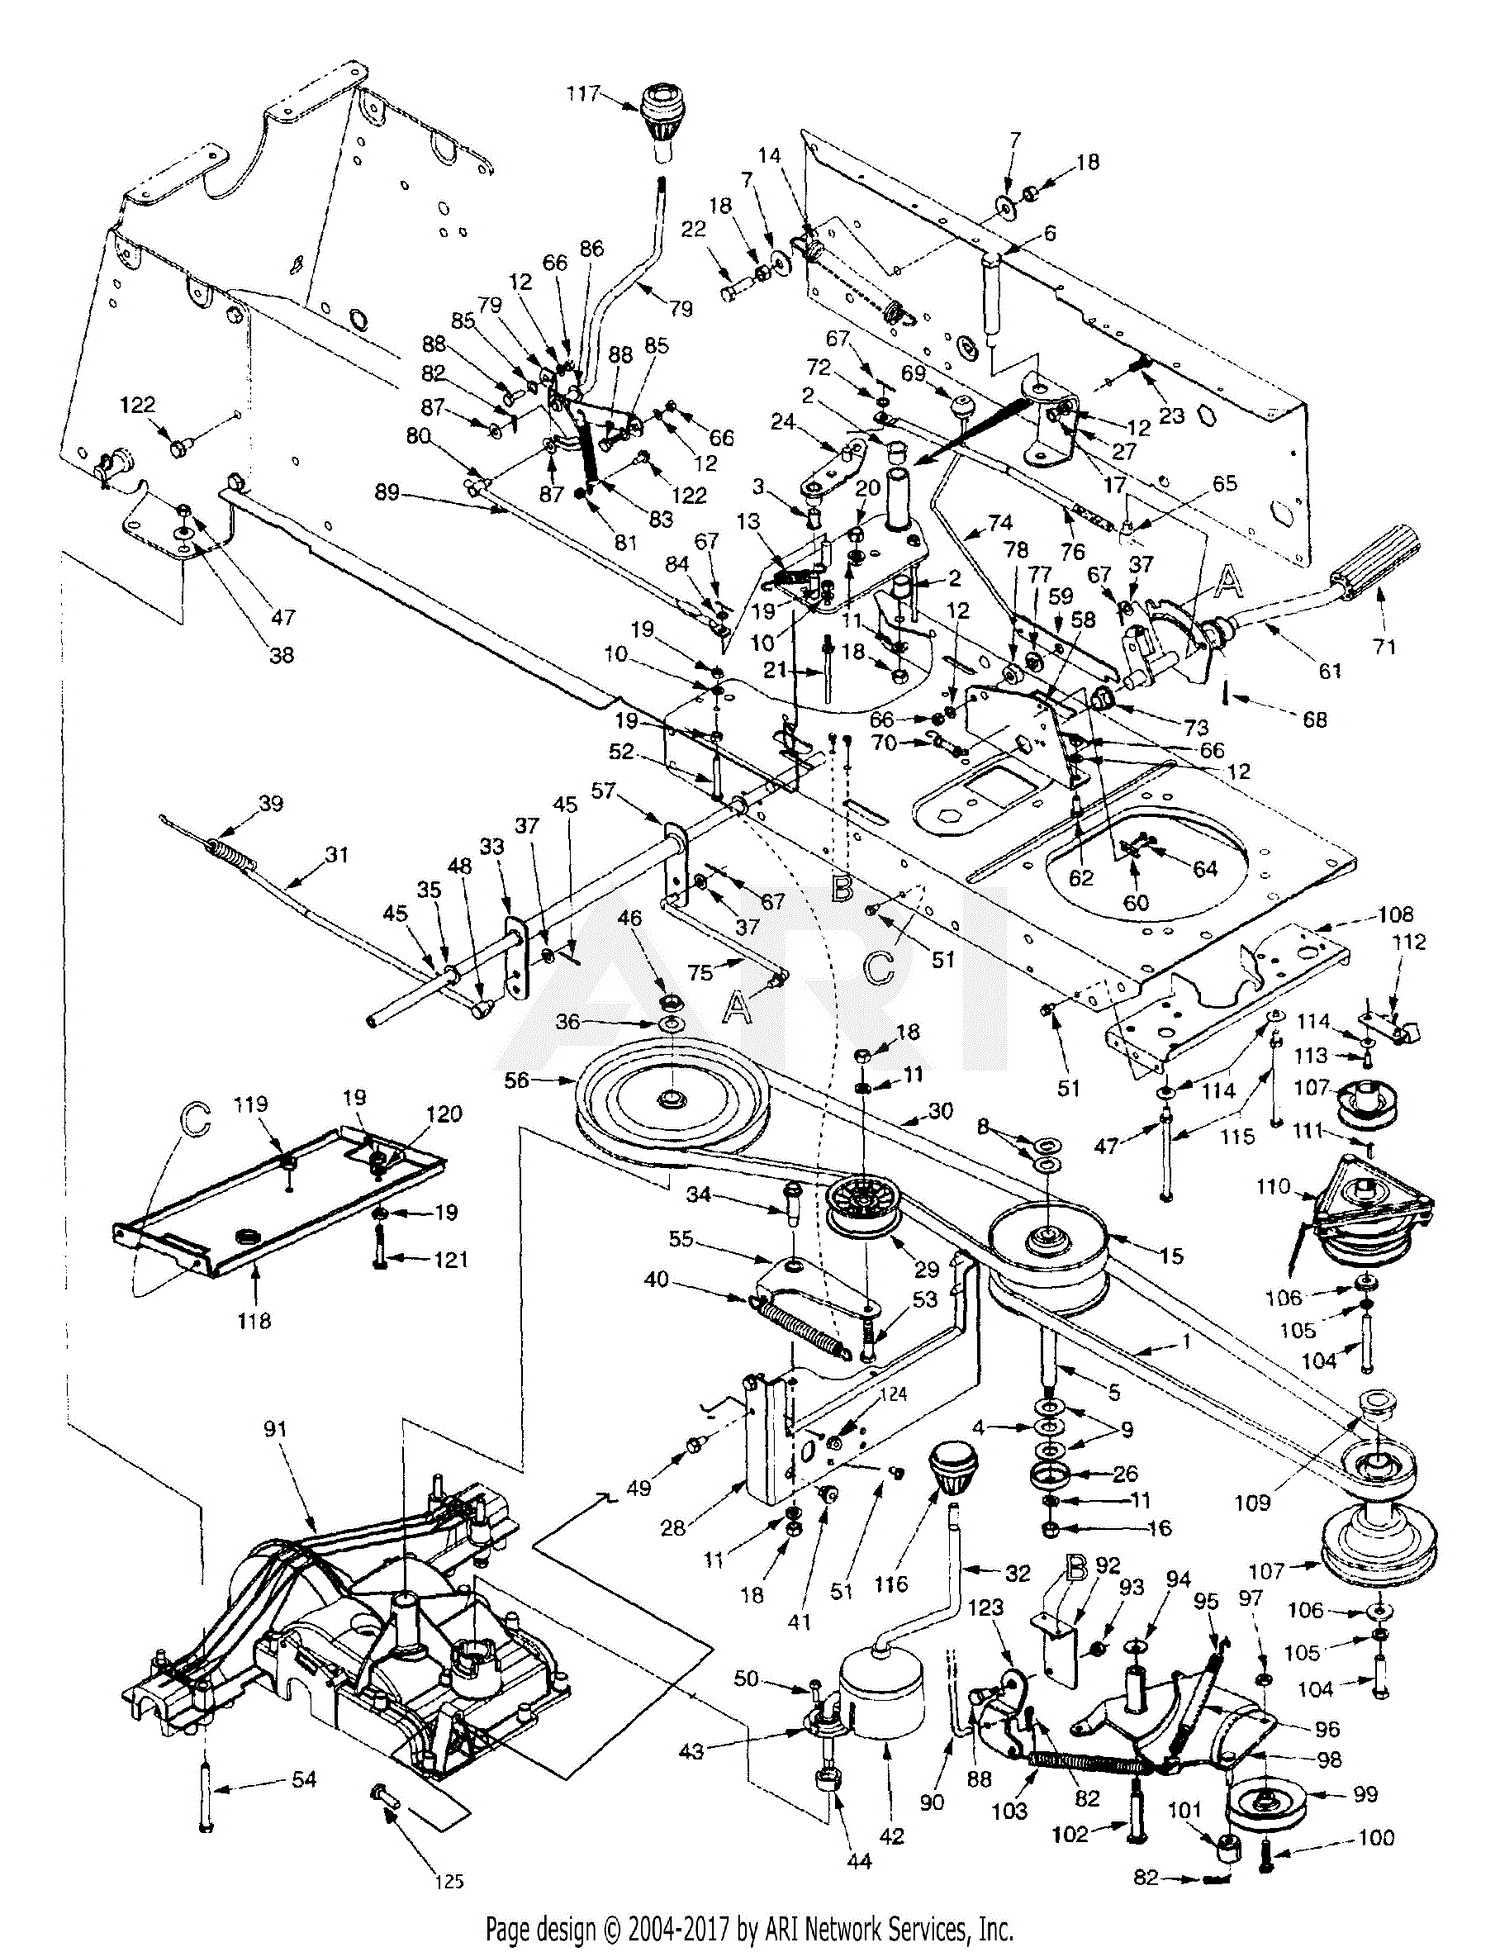 Huskee Riding Lawn Mower Parts Diagram Wiring Diagram Database